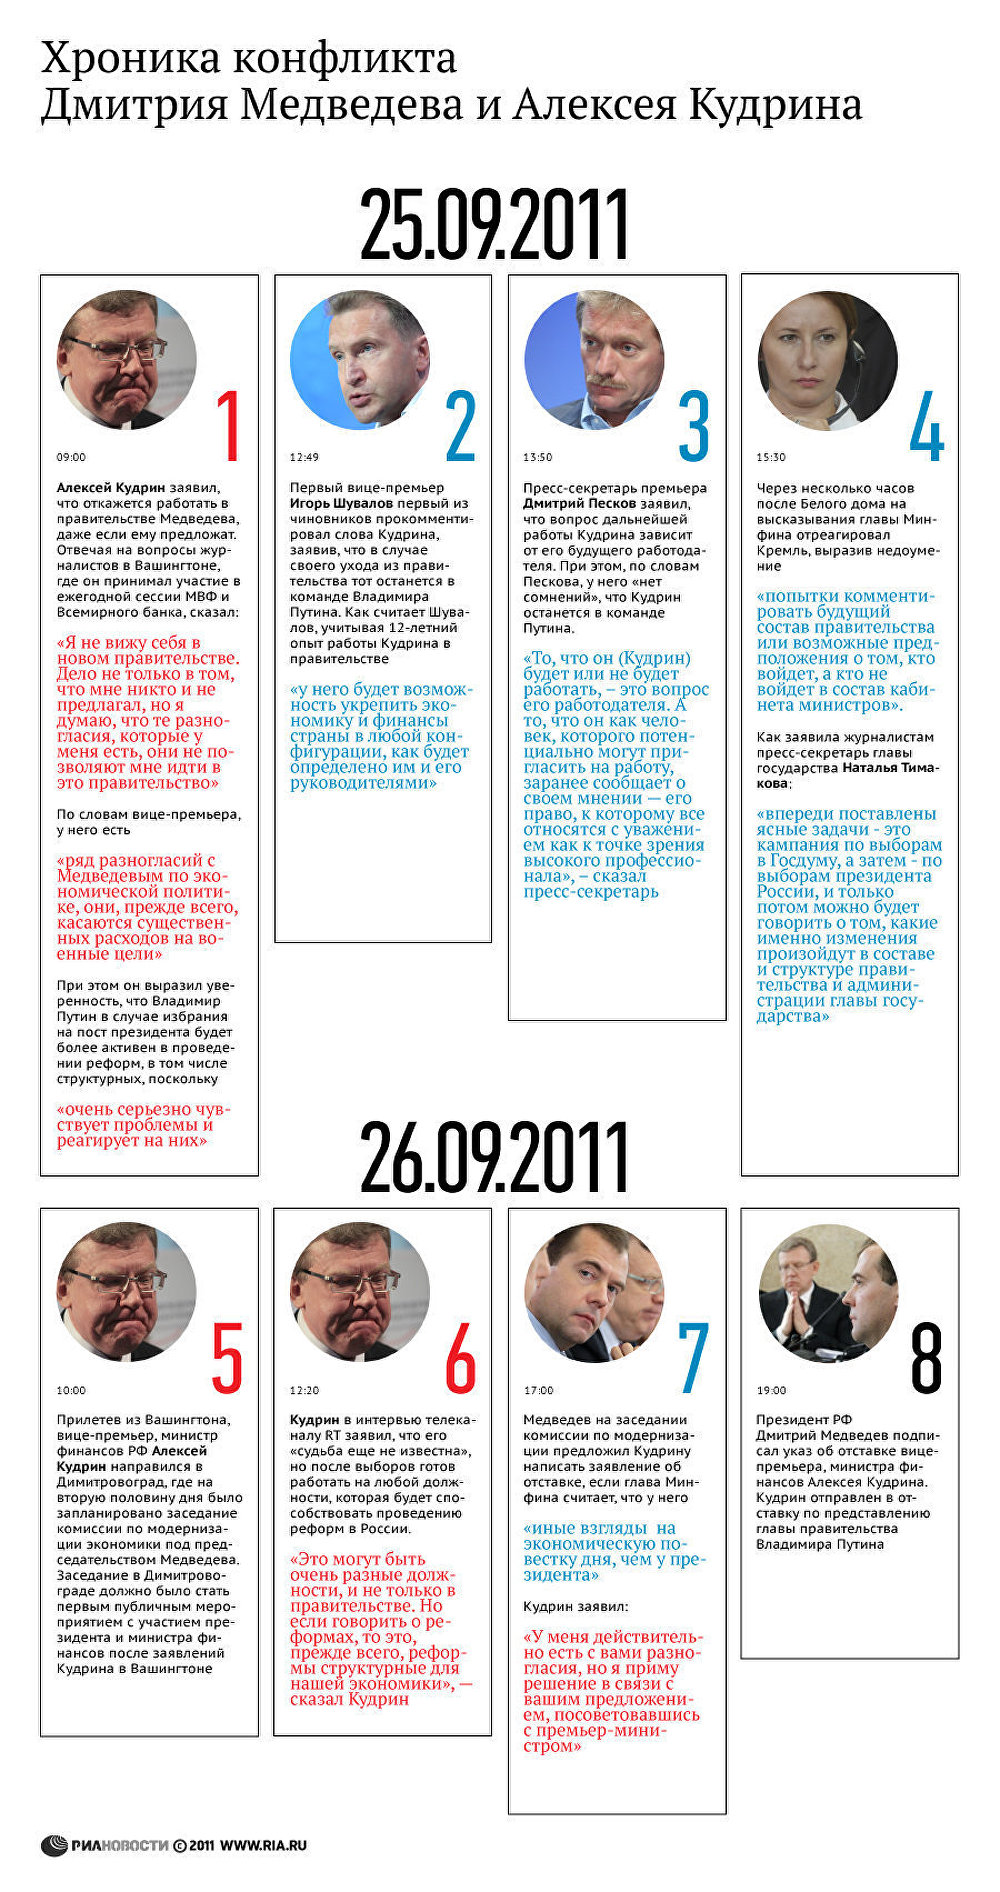 Хроника конфликта Медведева и Кудрина